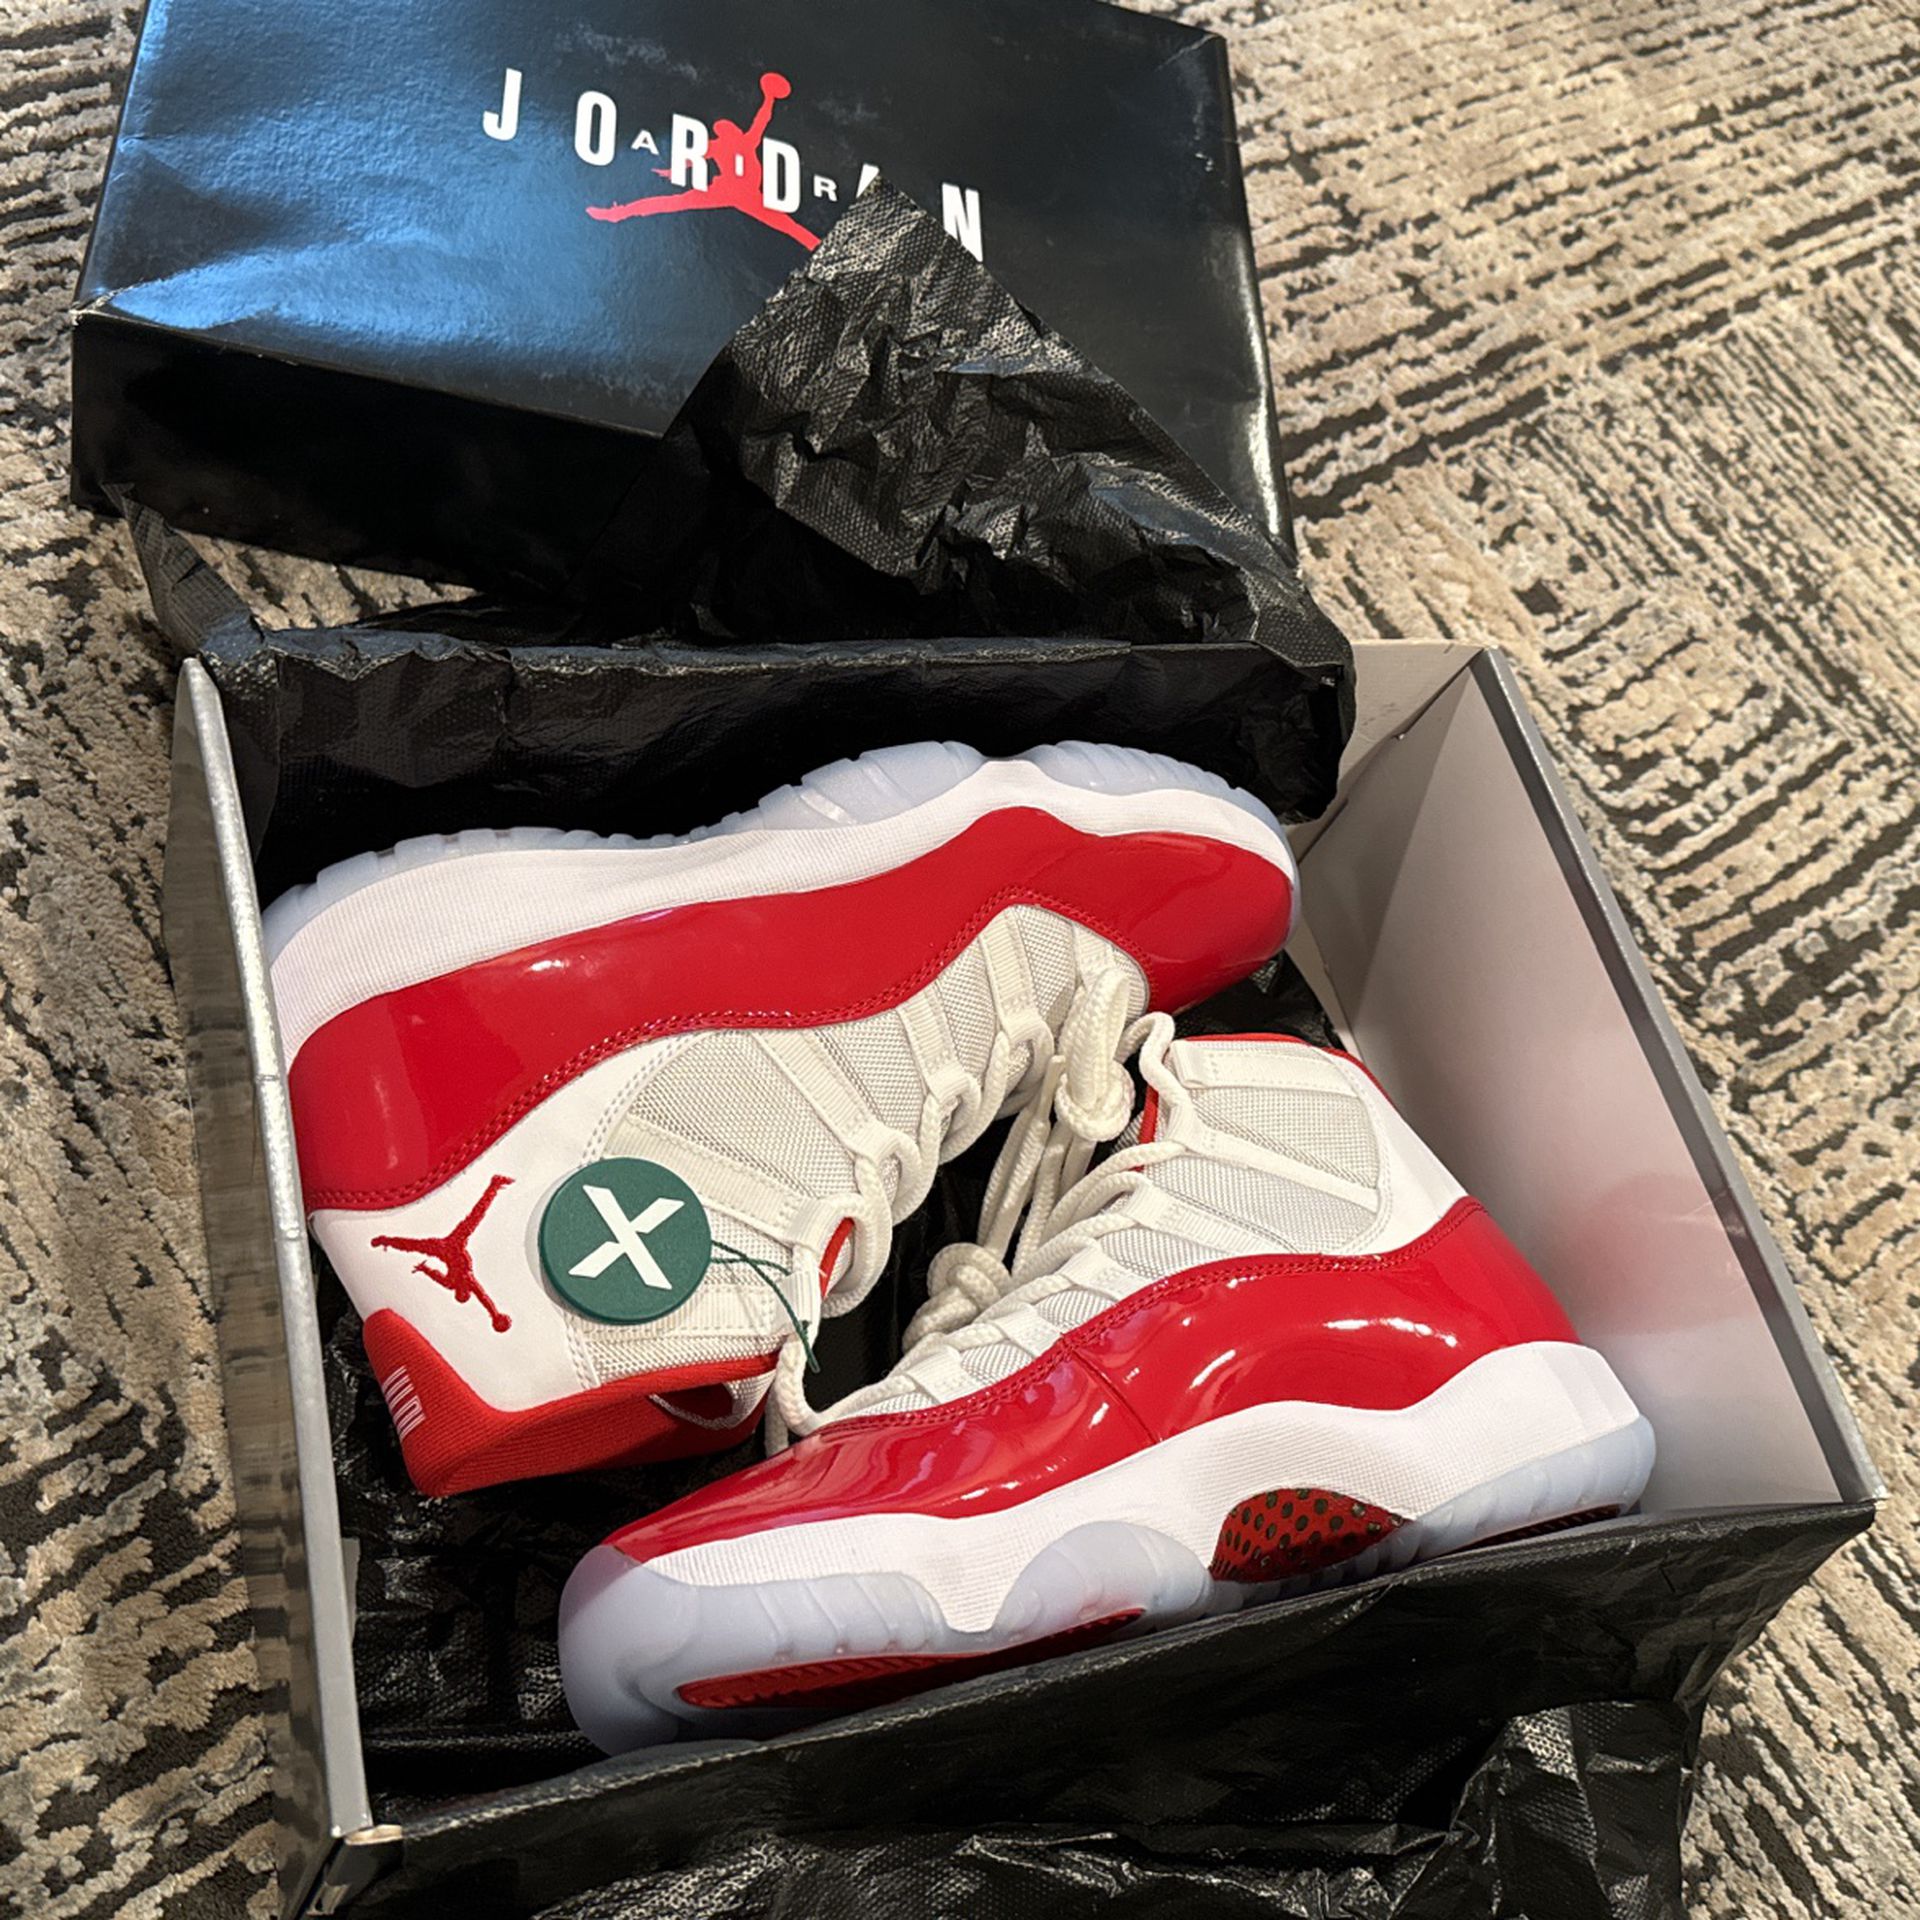 Nike Jordan 11 (Cherry) $175 OBO